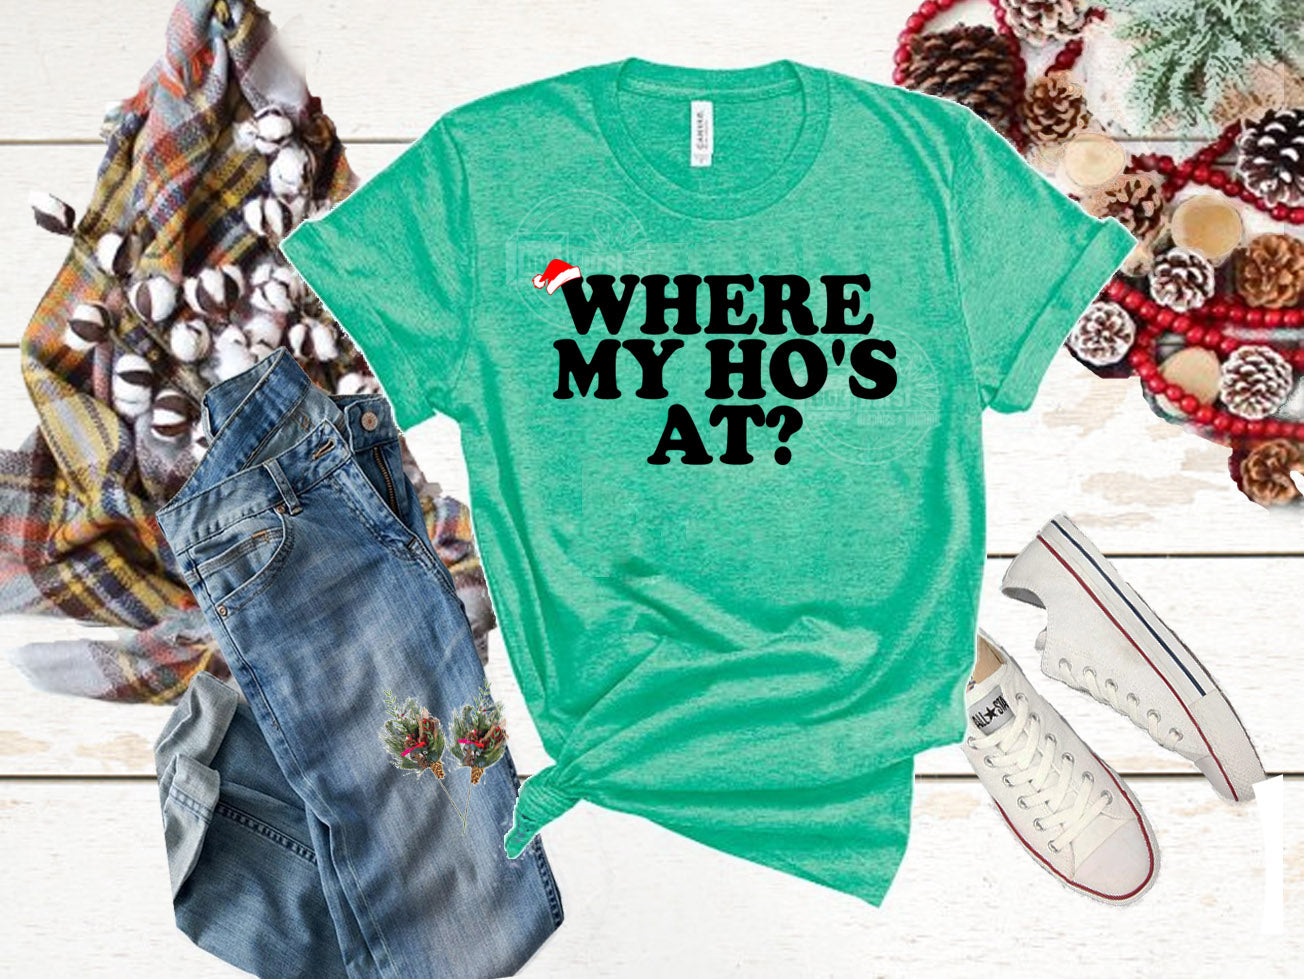 Where my ho's at | Unisex Christmas Shirt | Funny Christmas Shirts Adults